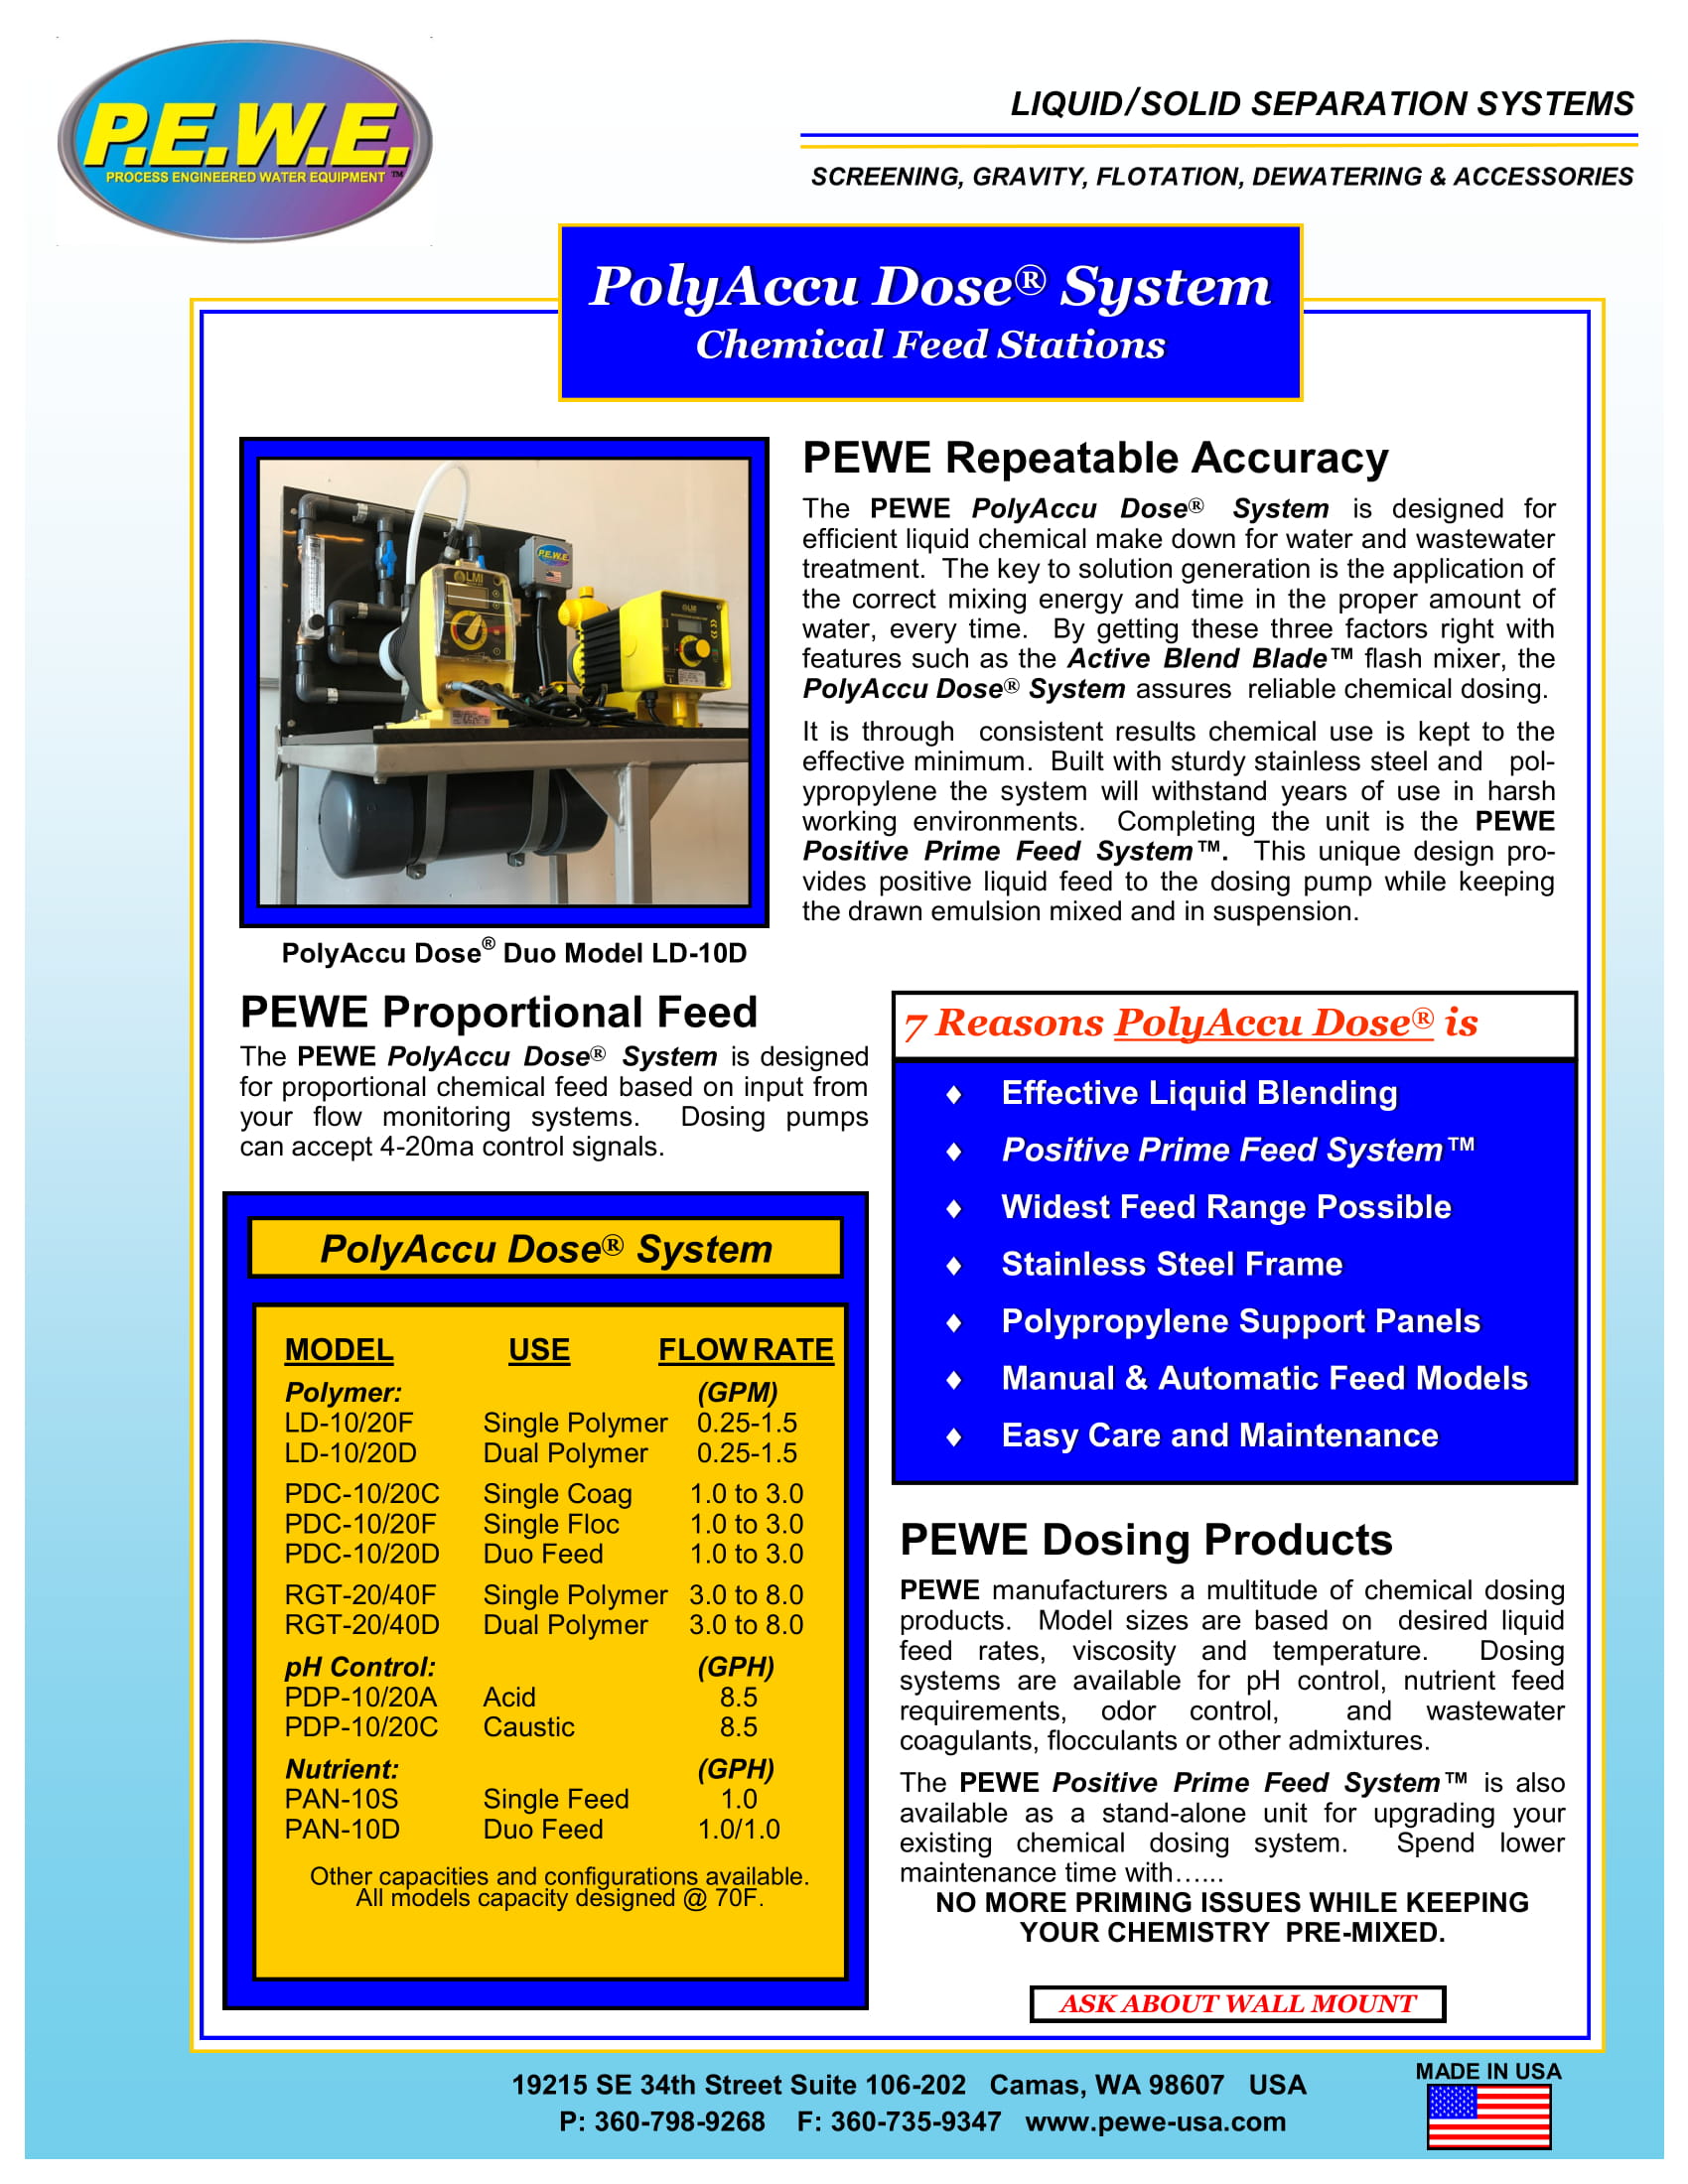 PEWE-PolyAccu-Dose-Brochure-062819-1.jpg